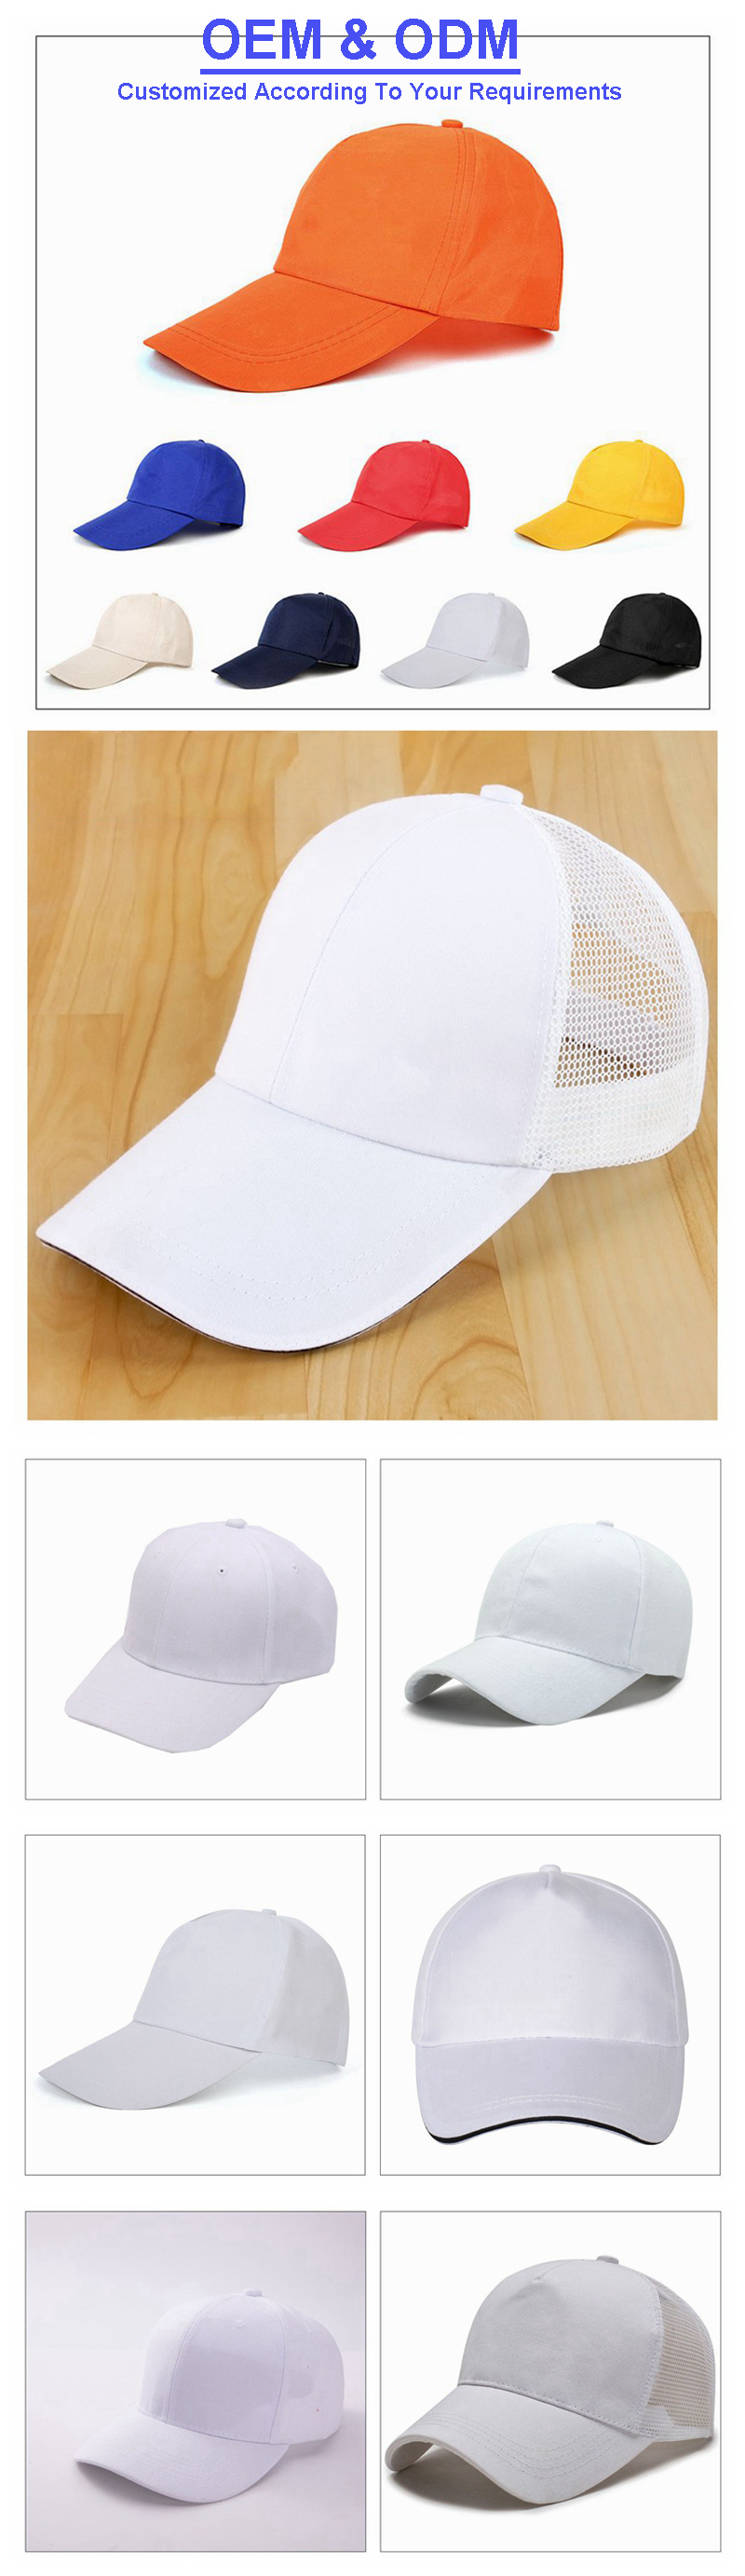 Military Baseball Cap Quality White Sports Golf Hats Cap